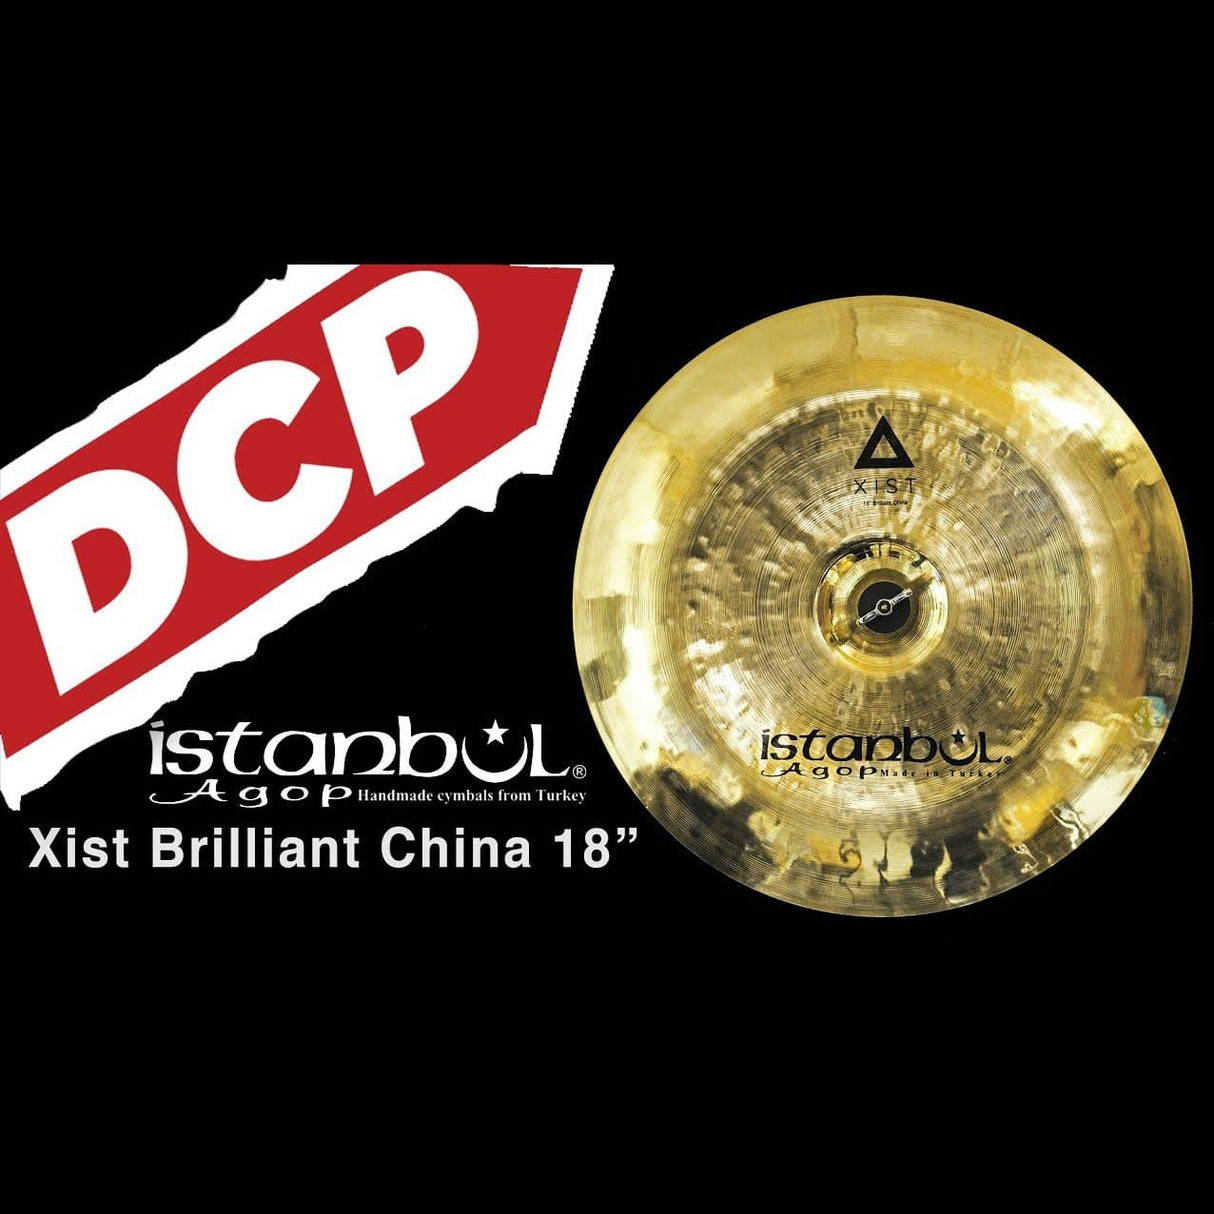 Istanbul Agop Xist Brilliant China Cymbal 18"